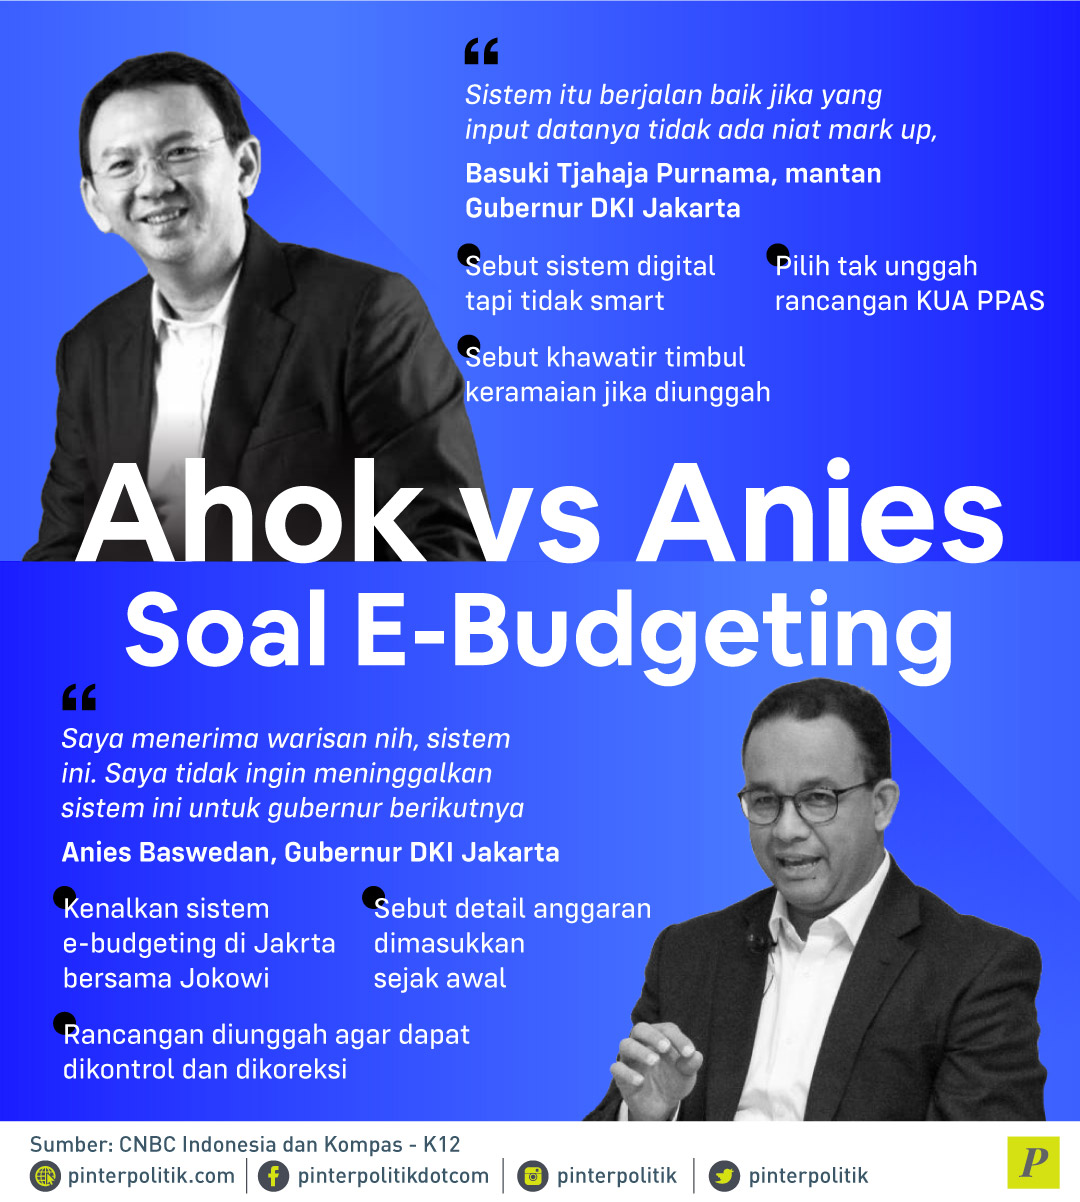 Ahok vs Anies Soal E-Budgeting